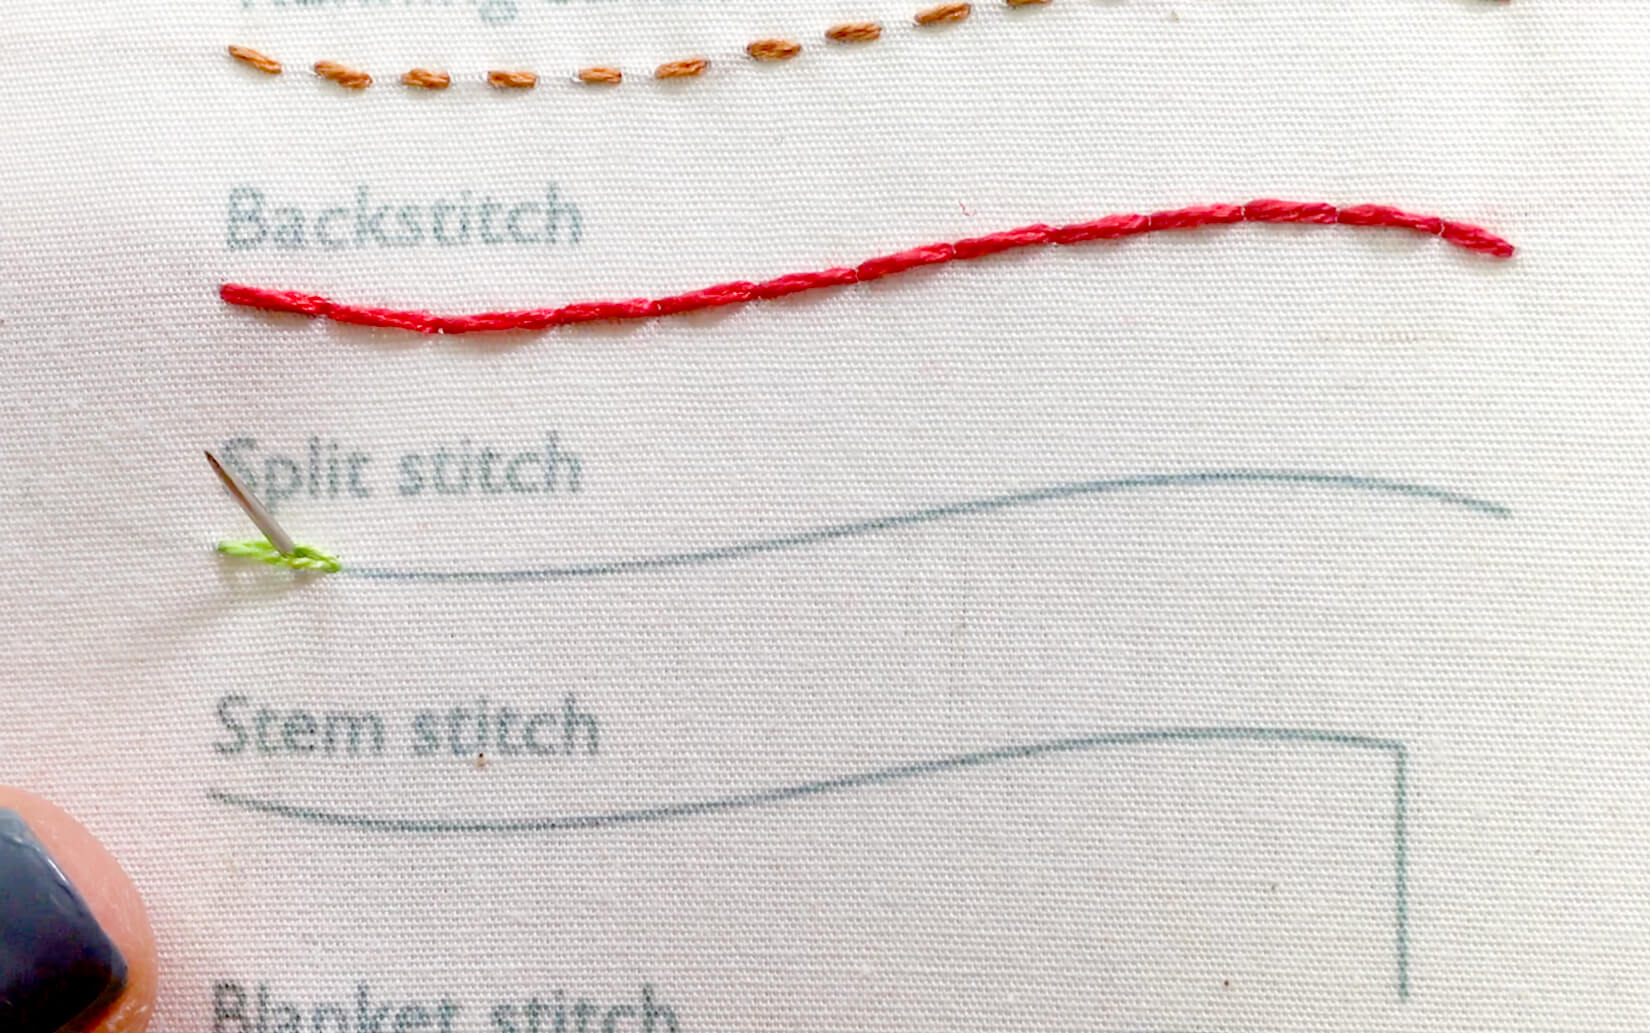 Image of stitching the split stitch